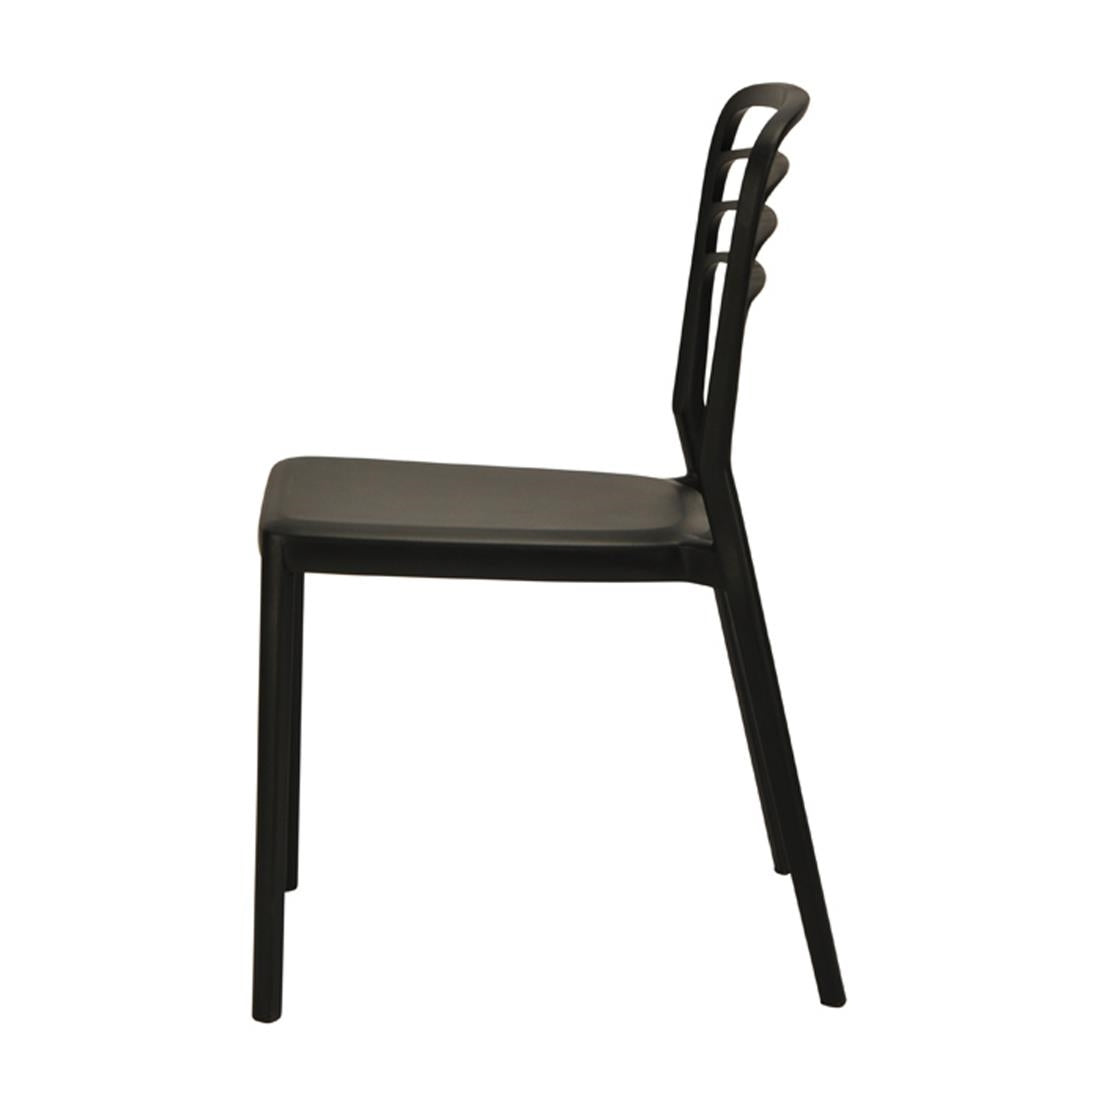 DM088 Newquay Ocean Plastic Outdoor Chair in Black (Pack of 4)